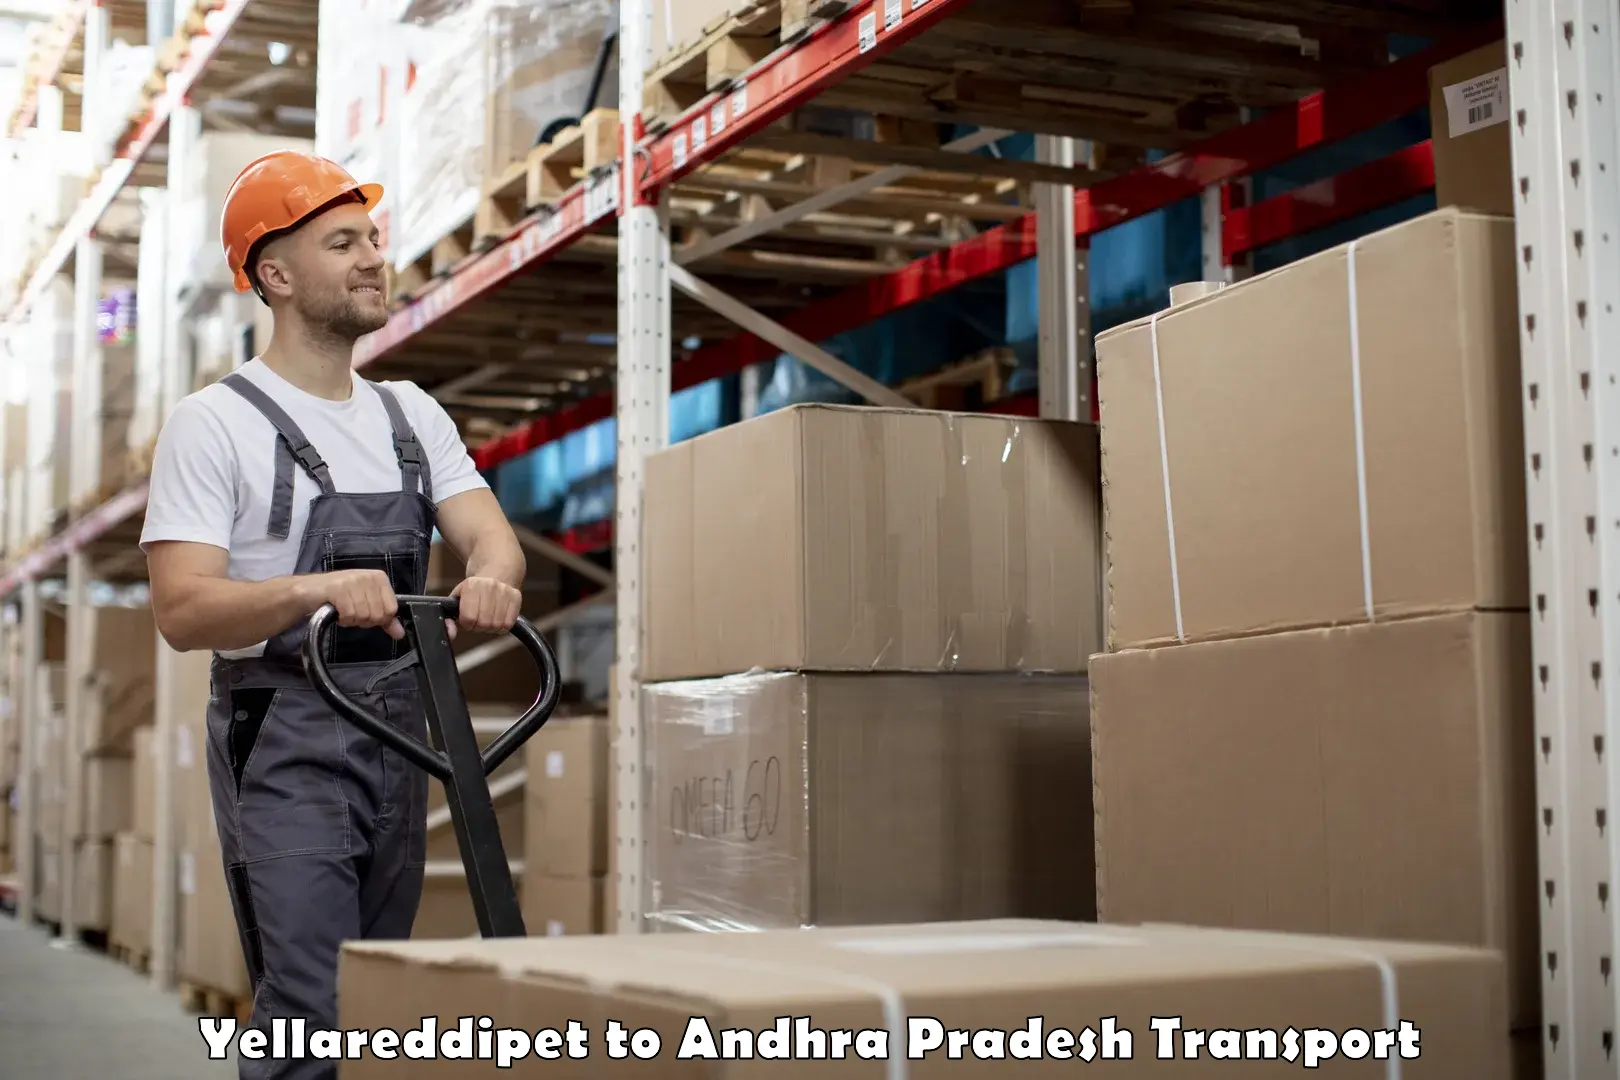 Lorry transport service Yellareddipet to Andhra Pradesh